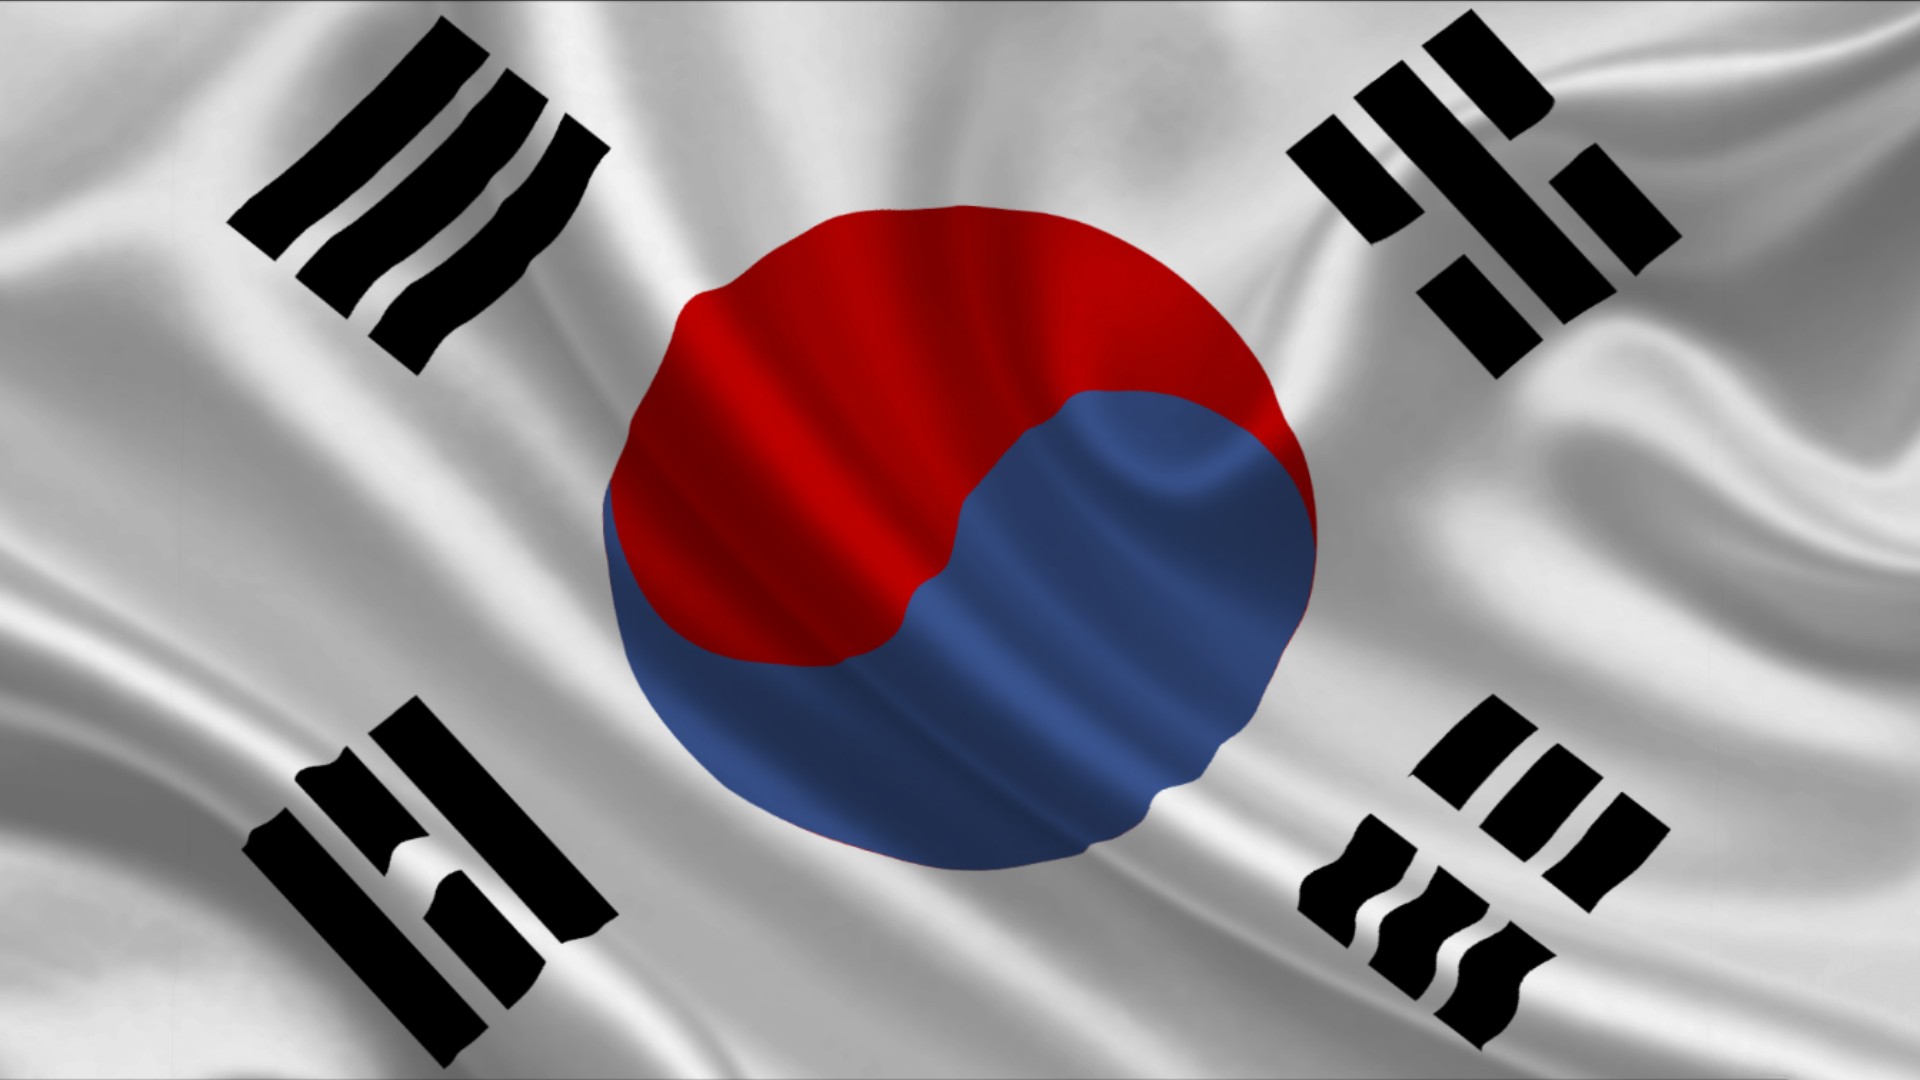 korean flag wallpaper,flag,jersey,sleeve,competition event,uniform